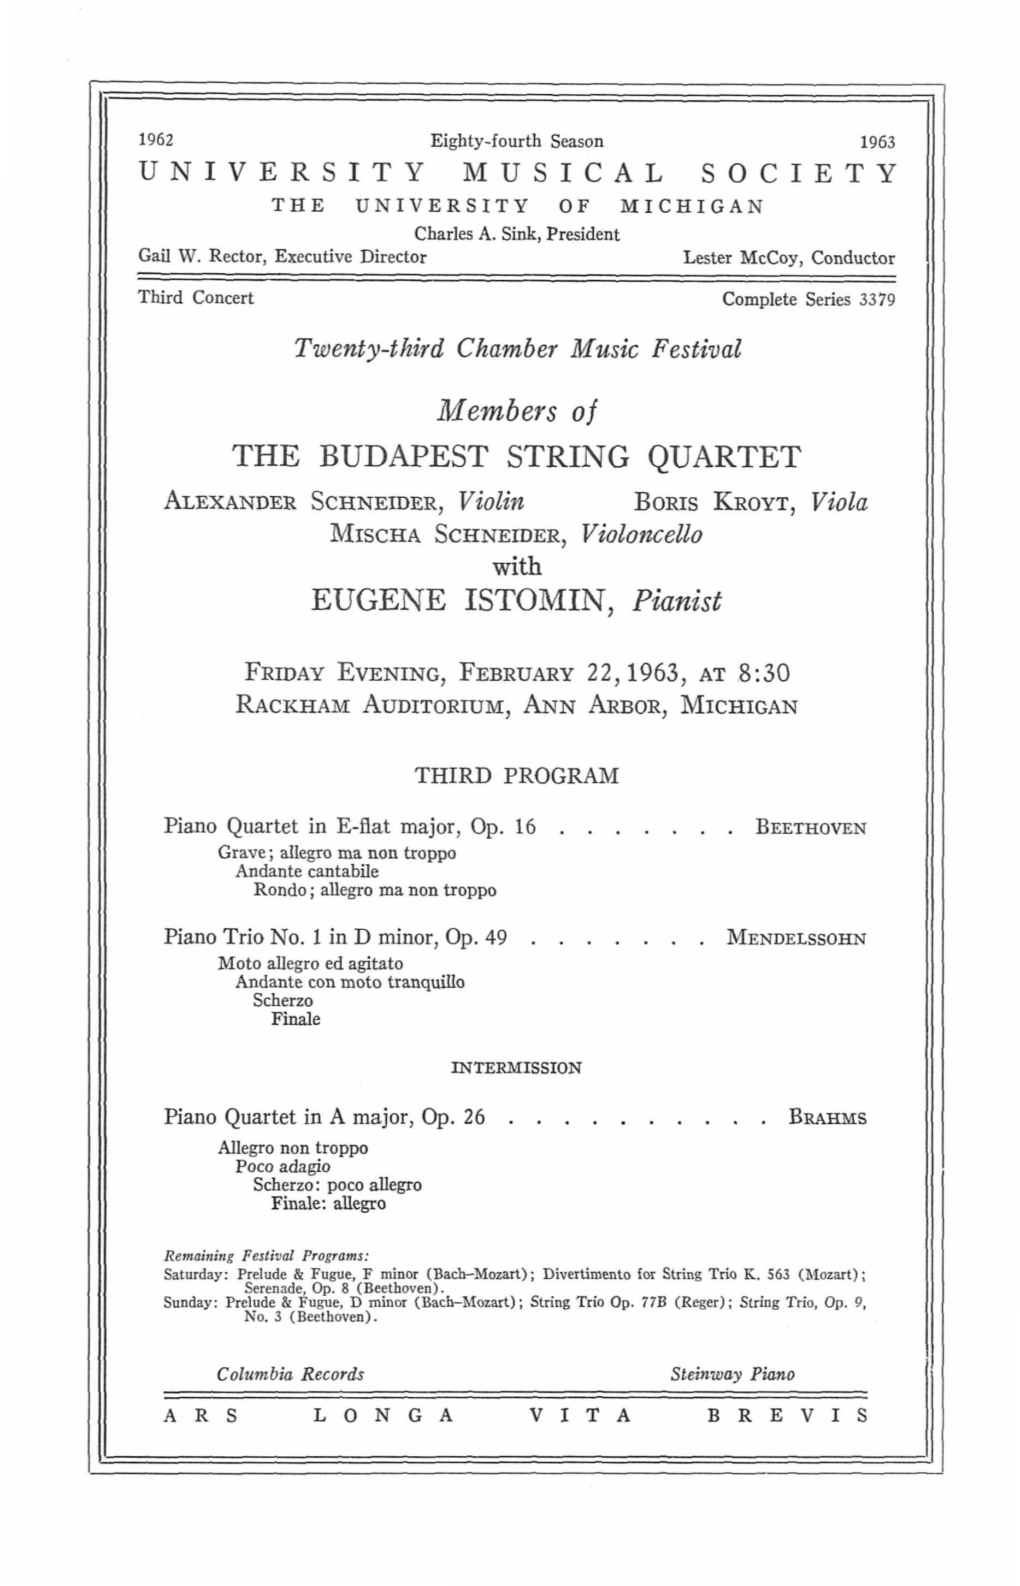 Members of the BUDAPEST STRING QUARTET EUGENE ISTOMIN, Pianist